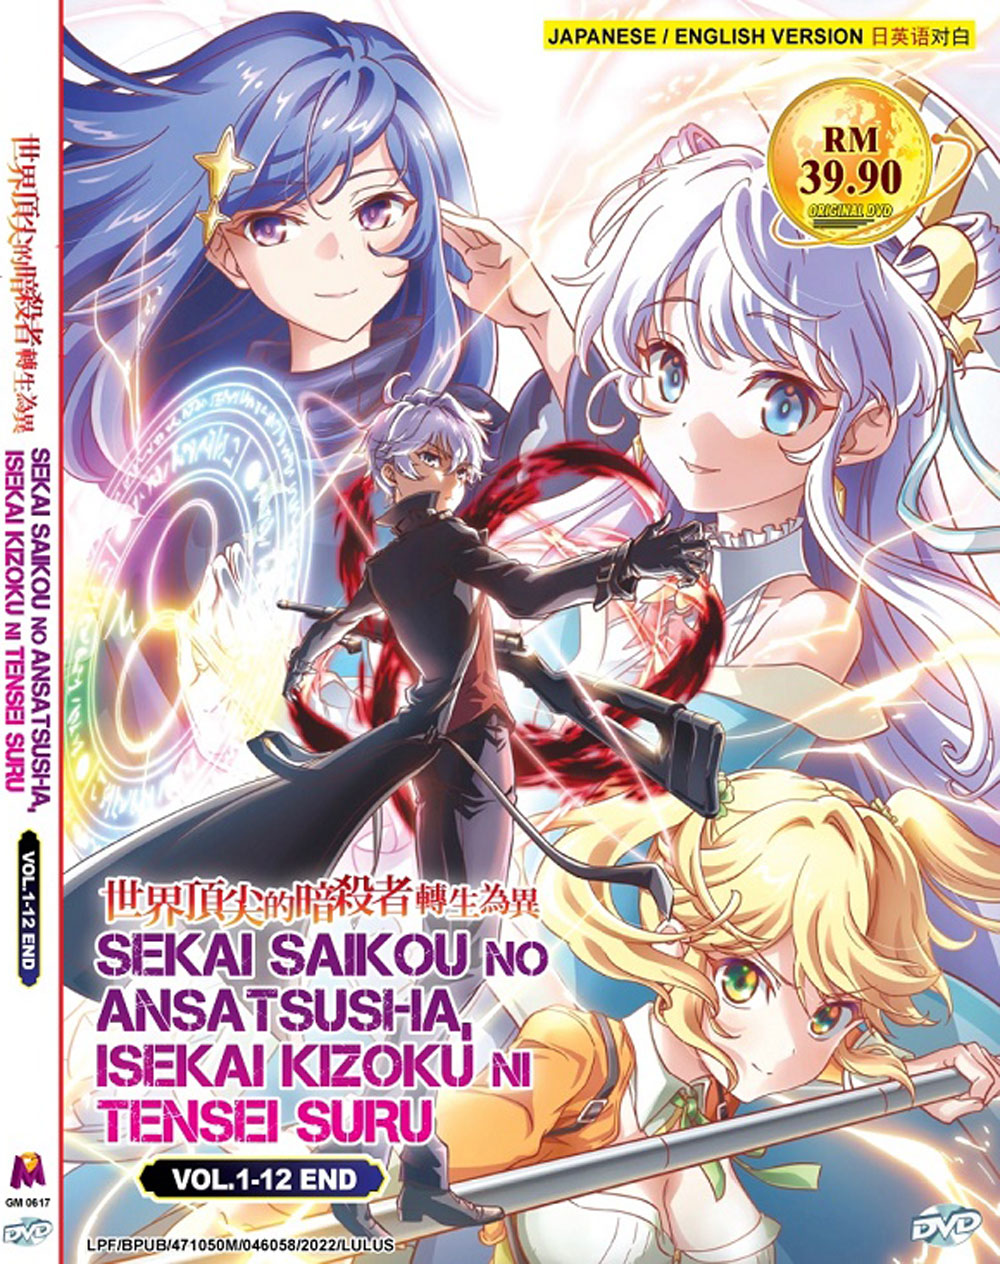 YAMADA-KUN TO LV999 no Koi Wo Suru Anime DVD Japanese Vol.1-13 END